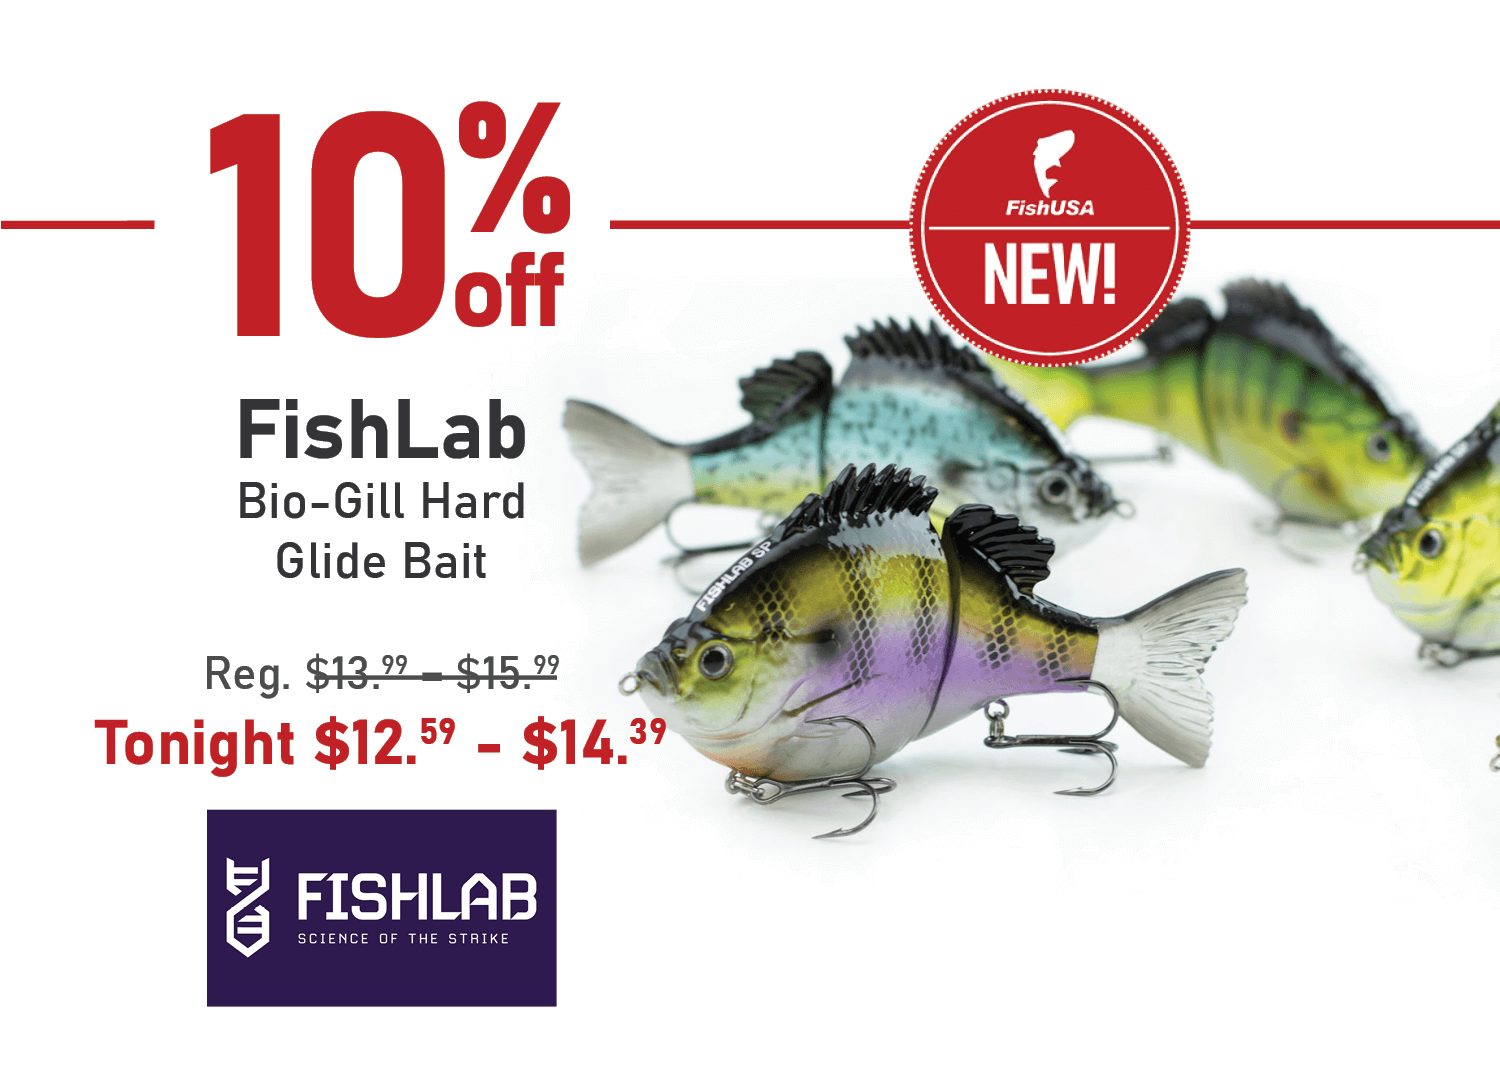 Save 10% on the FishLab Bio-Gill Hard Glide Bait